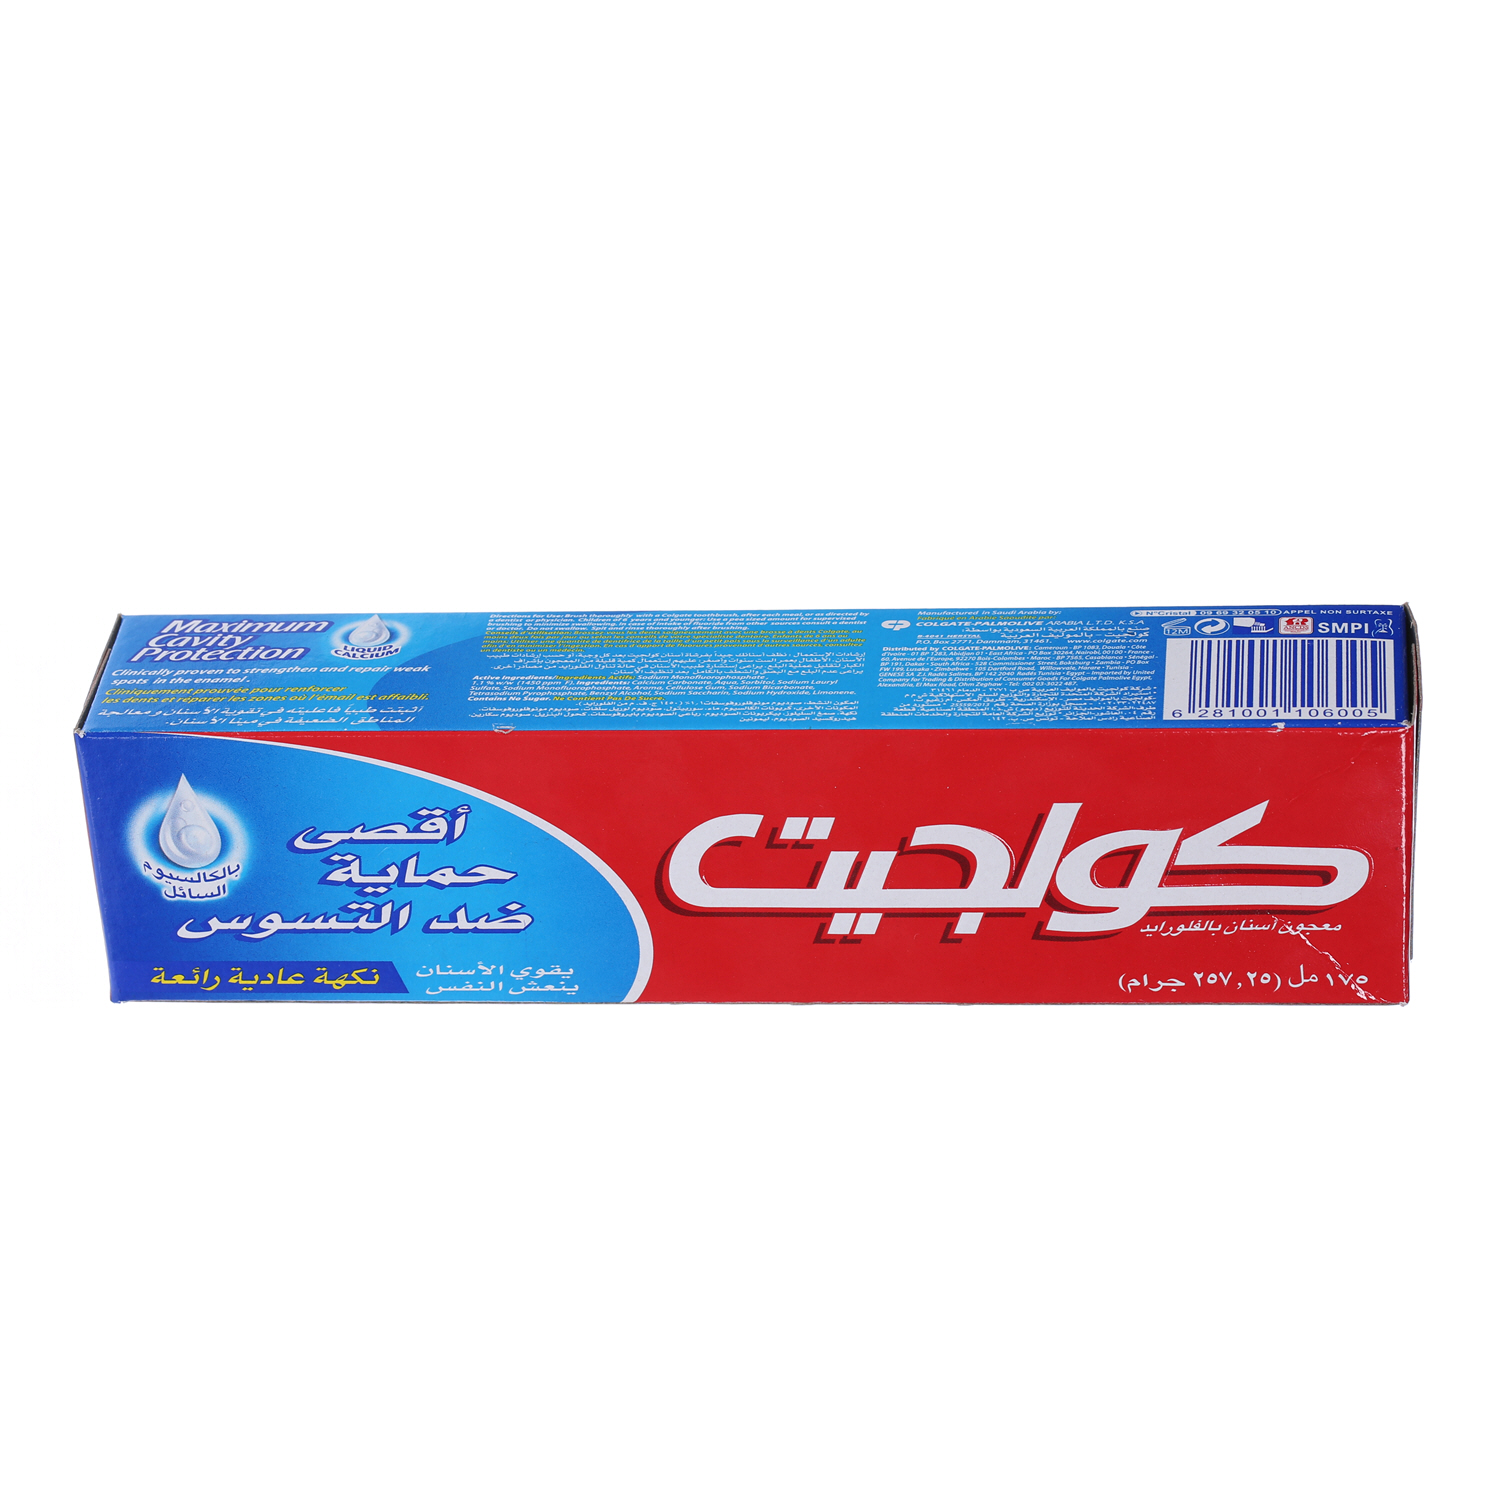 Colgate Regular Toothpaste 175ml